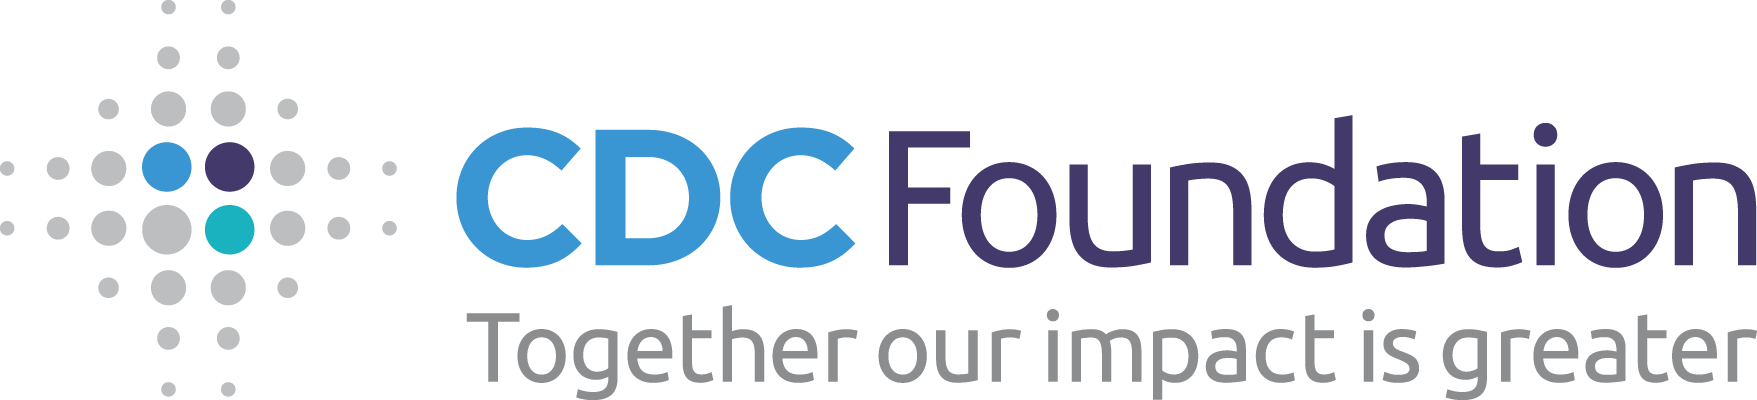 Logo of the company CDC Foundation